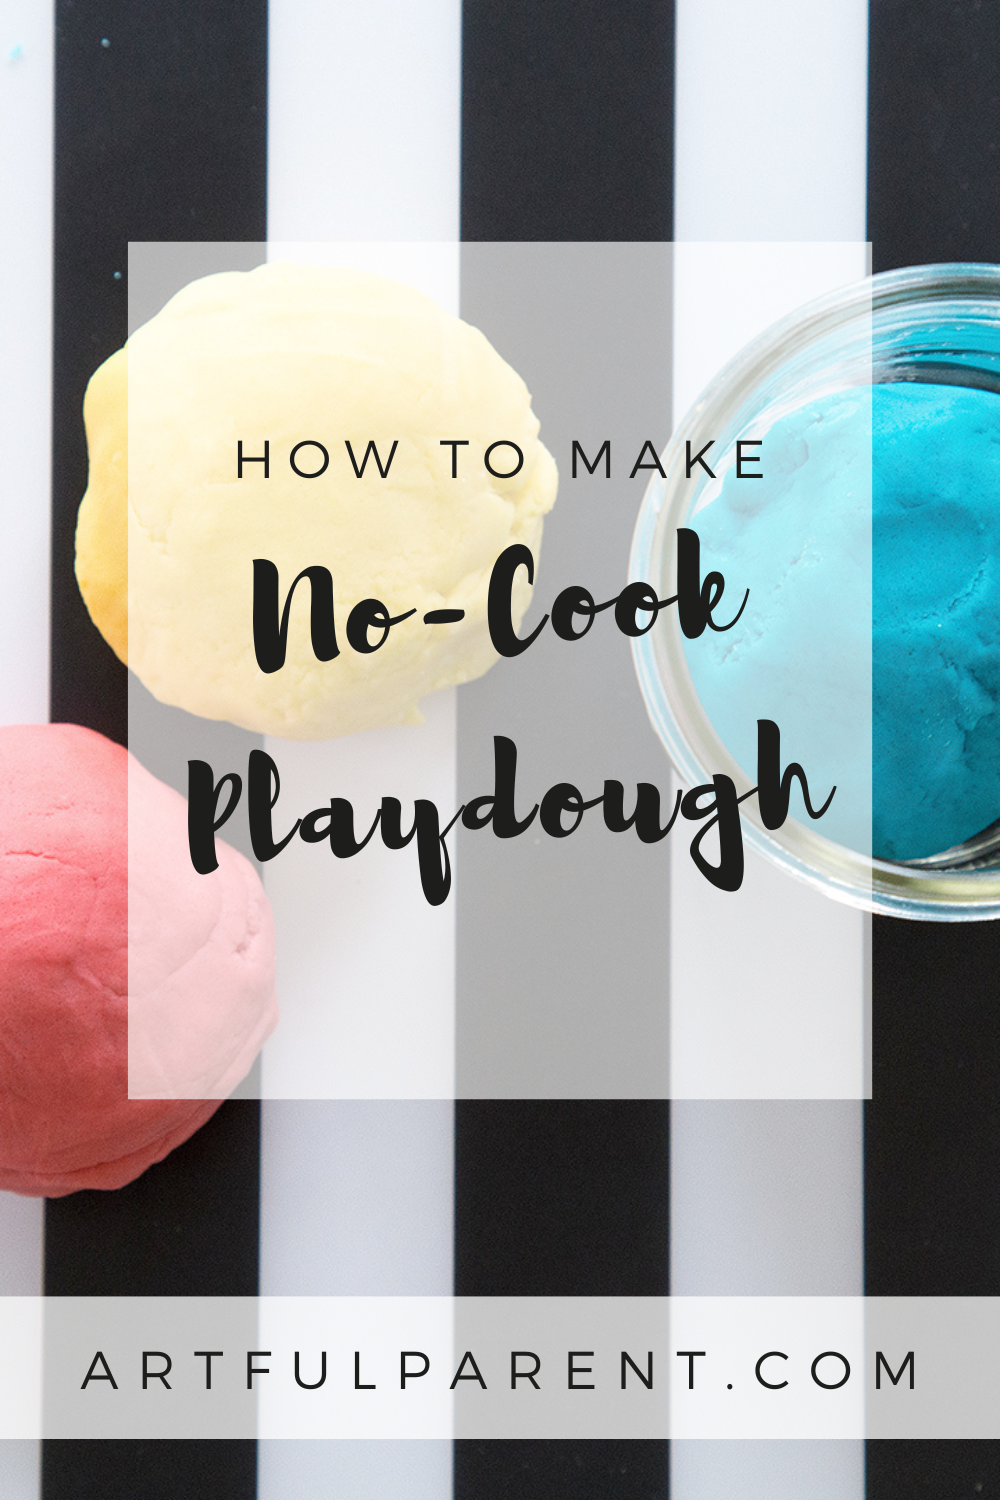 No-Cook Play Dough Recipe – Inspire My Play